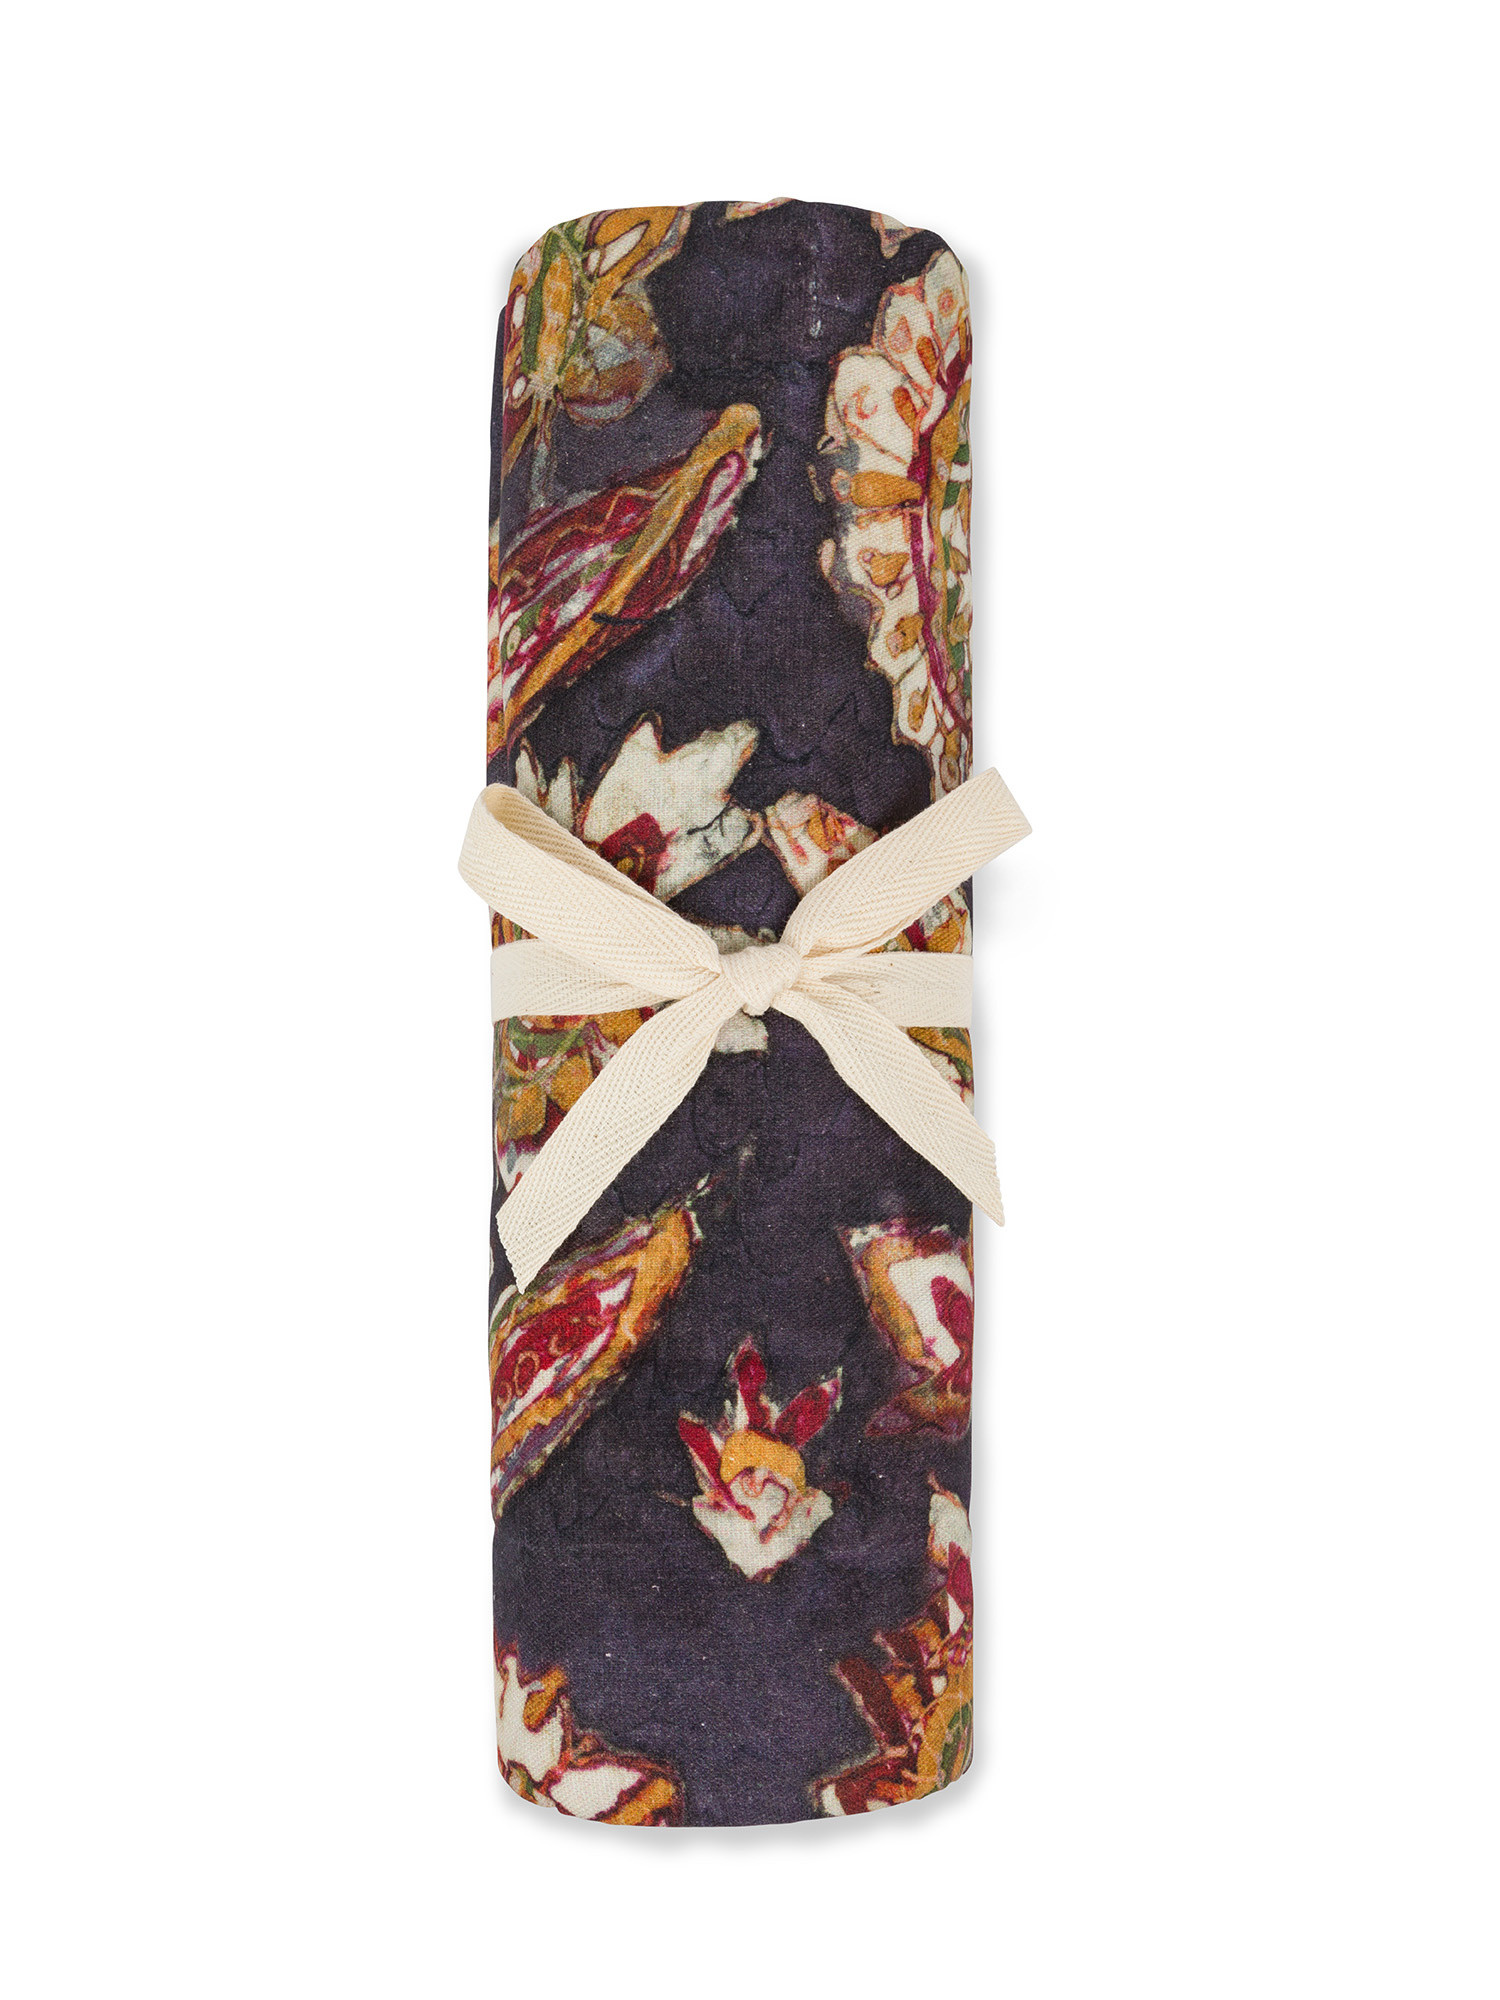 Telo arredo cotone motivo etnico, Multicolor, large image number 1